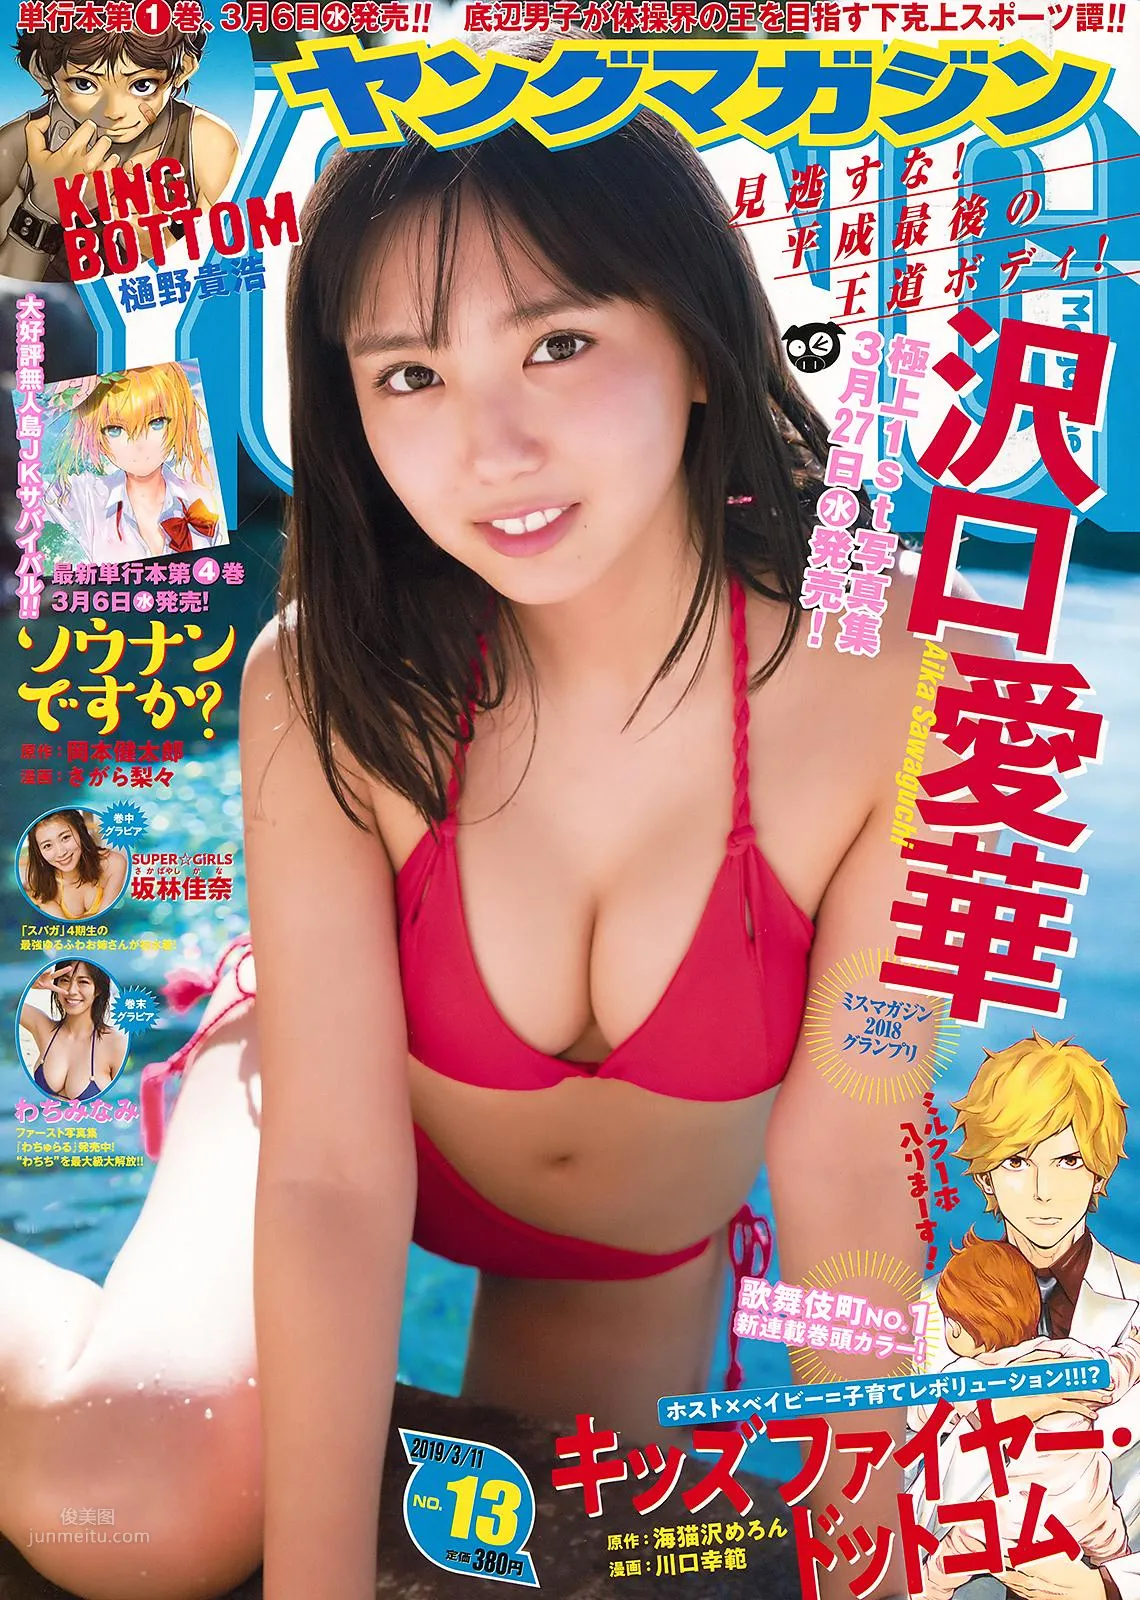 沢口愛華, Aika Sawaguchi - Young Magazine, Weekly Playboy, 2019_14